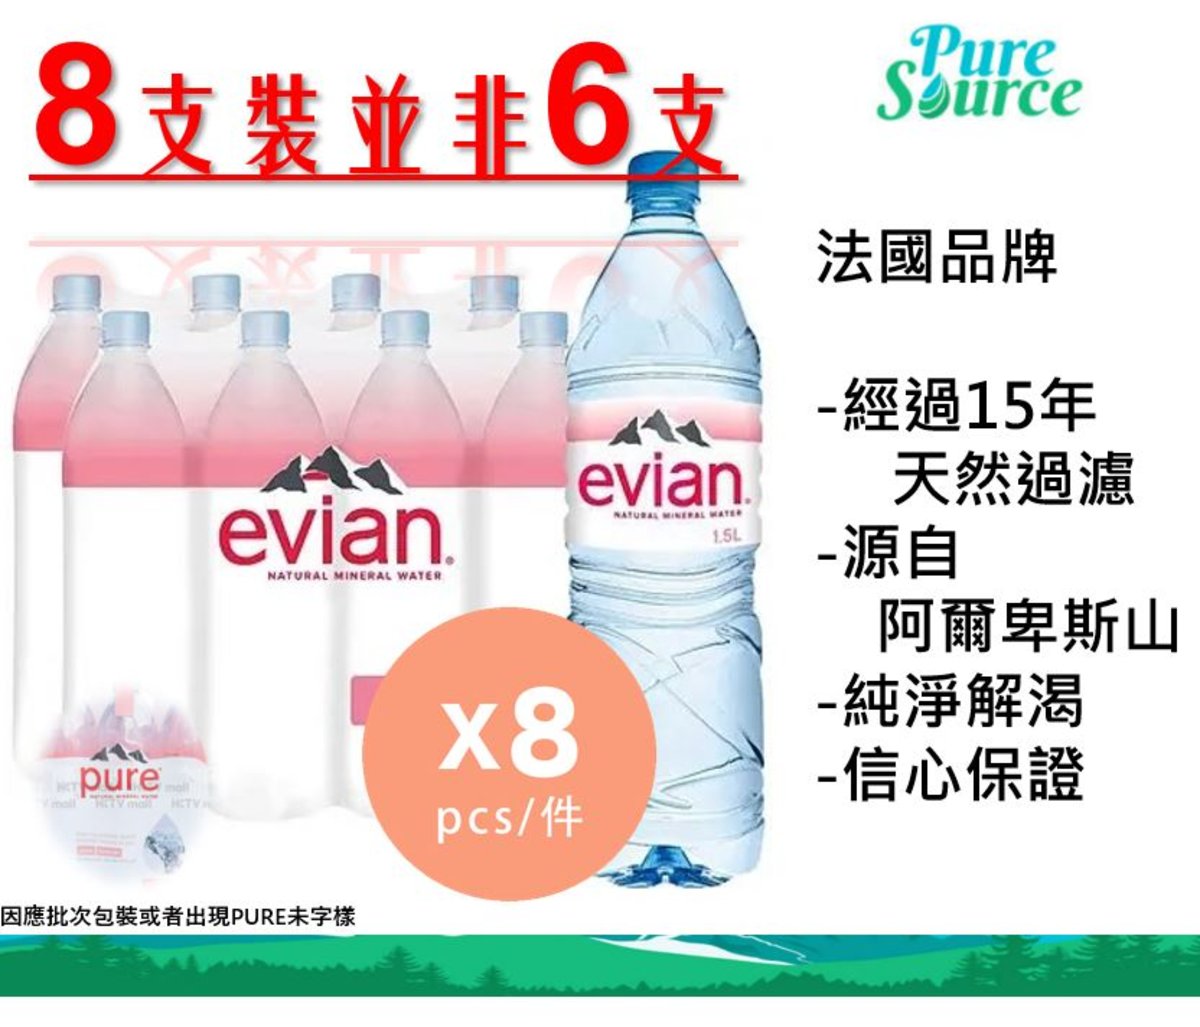 Evian [原箱] [真正全成最平] 法國天然礦泉水 1.5L x 8支裝- Evian 伊雲 #因應不同批次, 包裝或會有機會印有"PURE"字樣